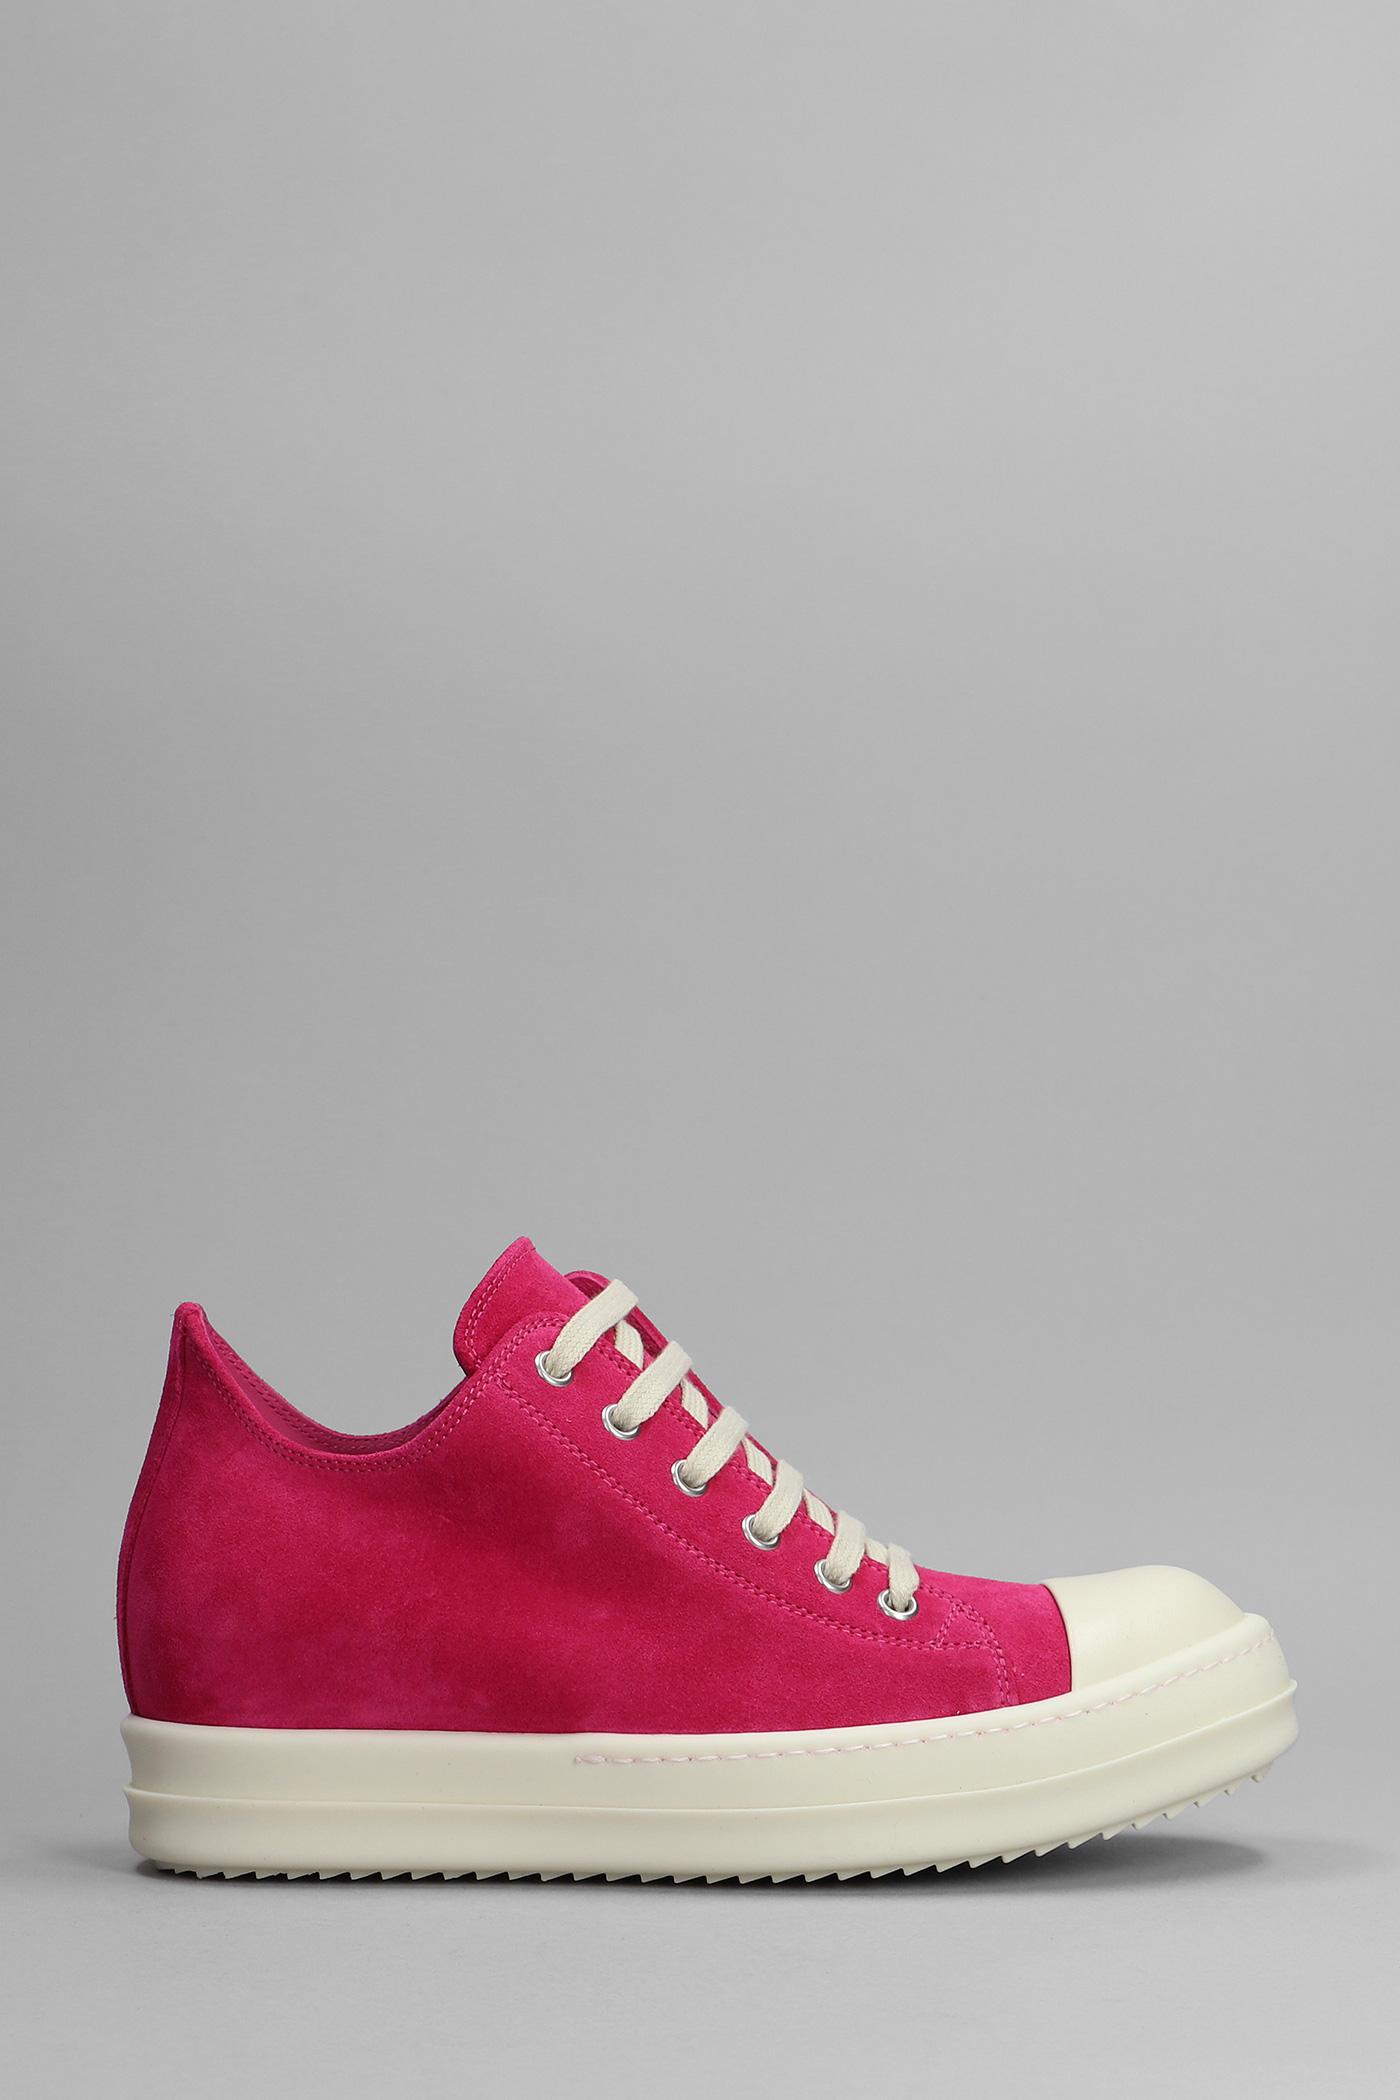 Rick Owens Low Sneaks Sneakers In Rose-pink Leather | Lyst